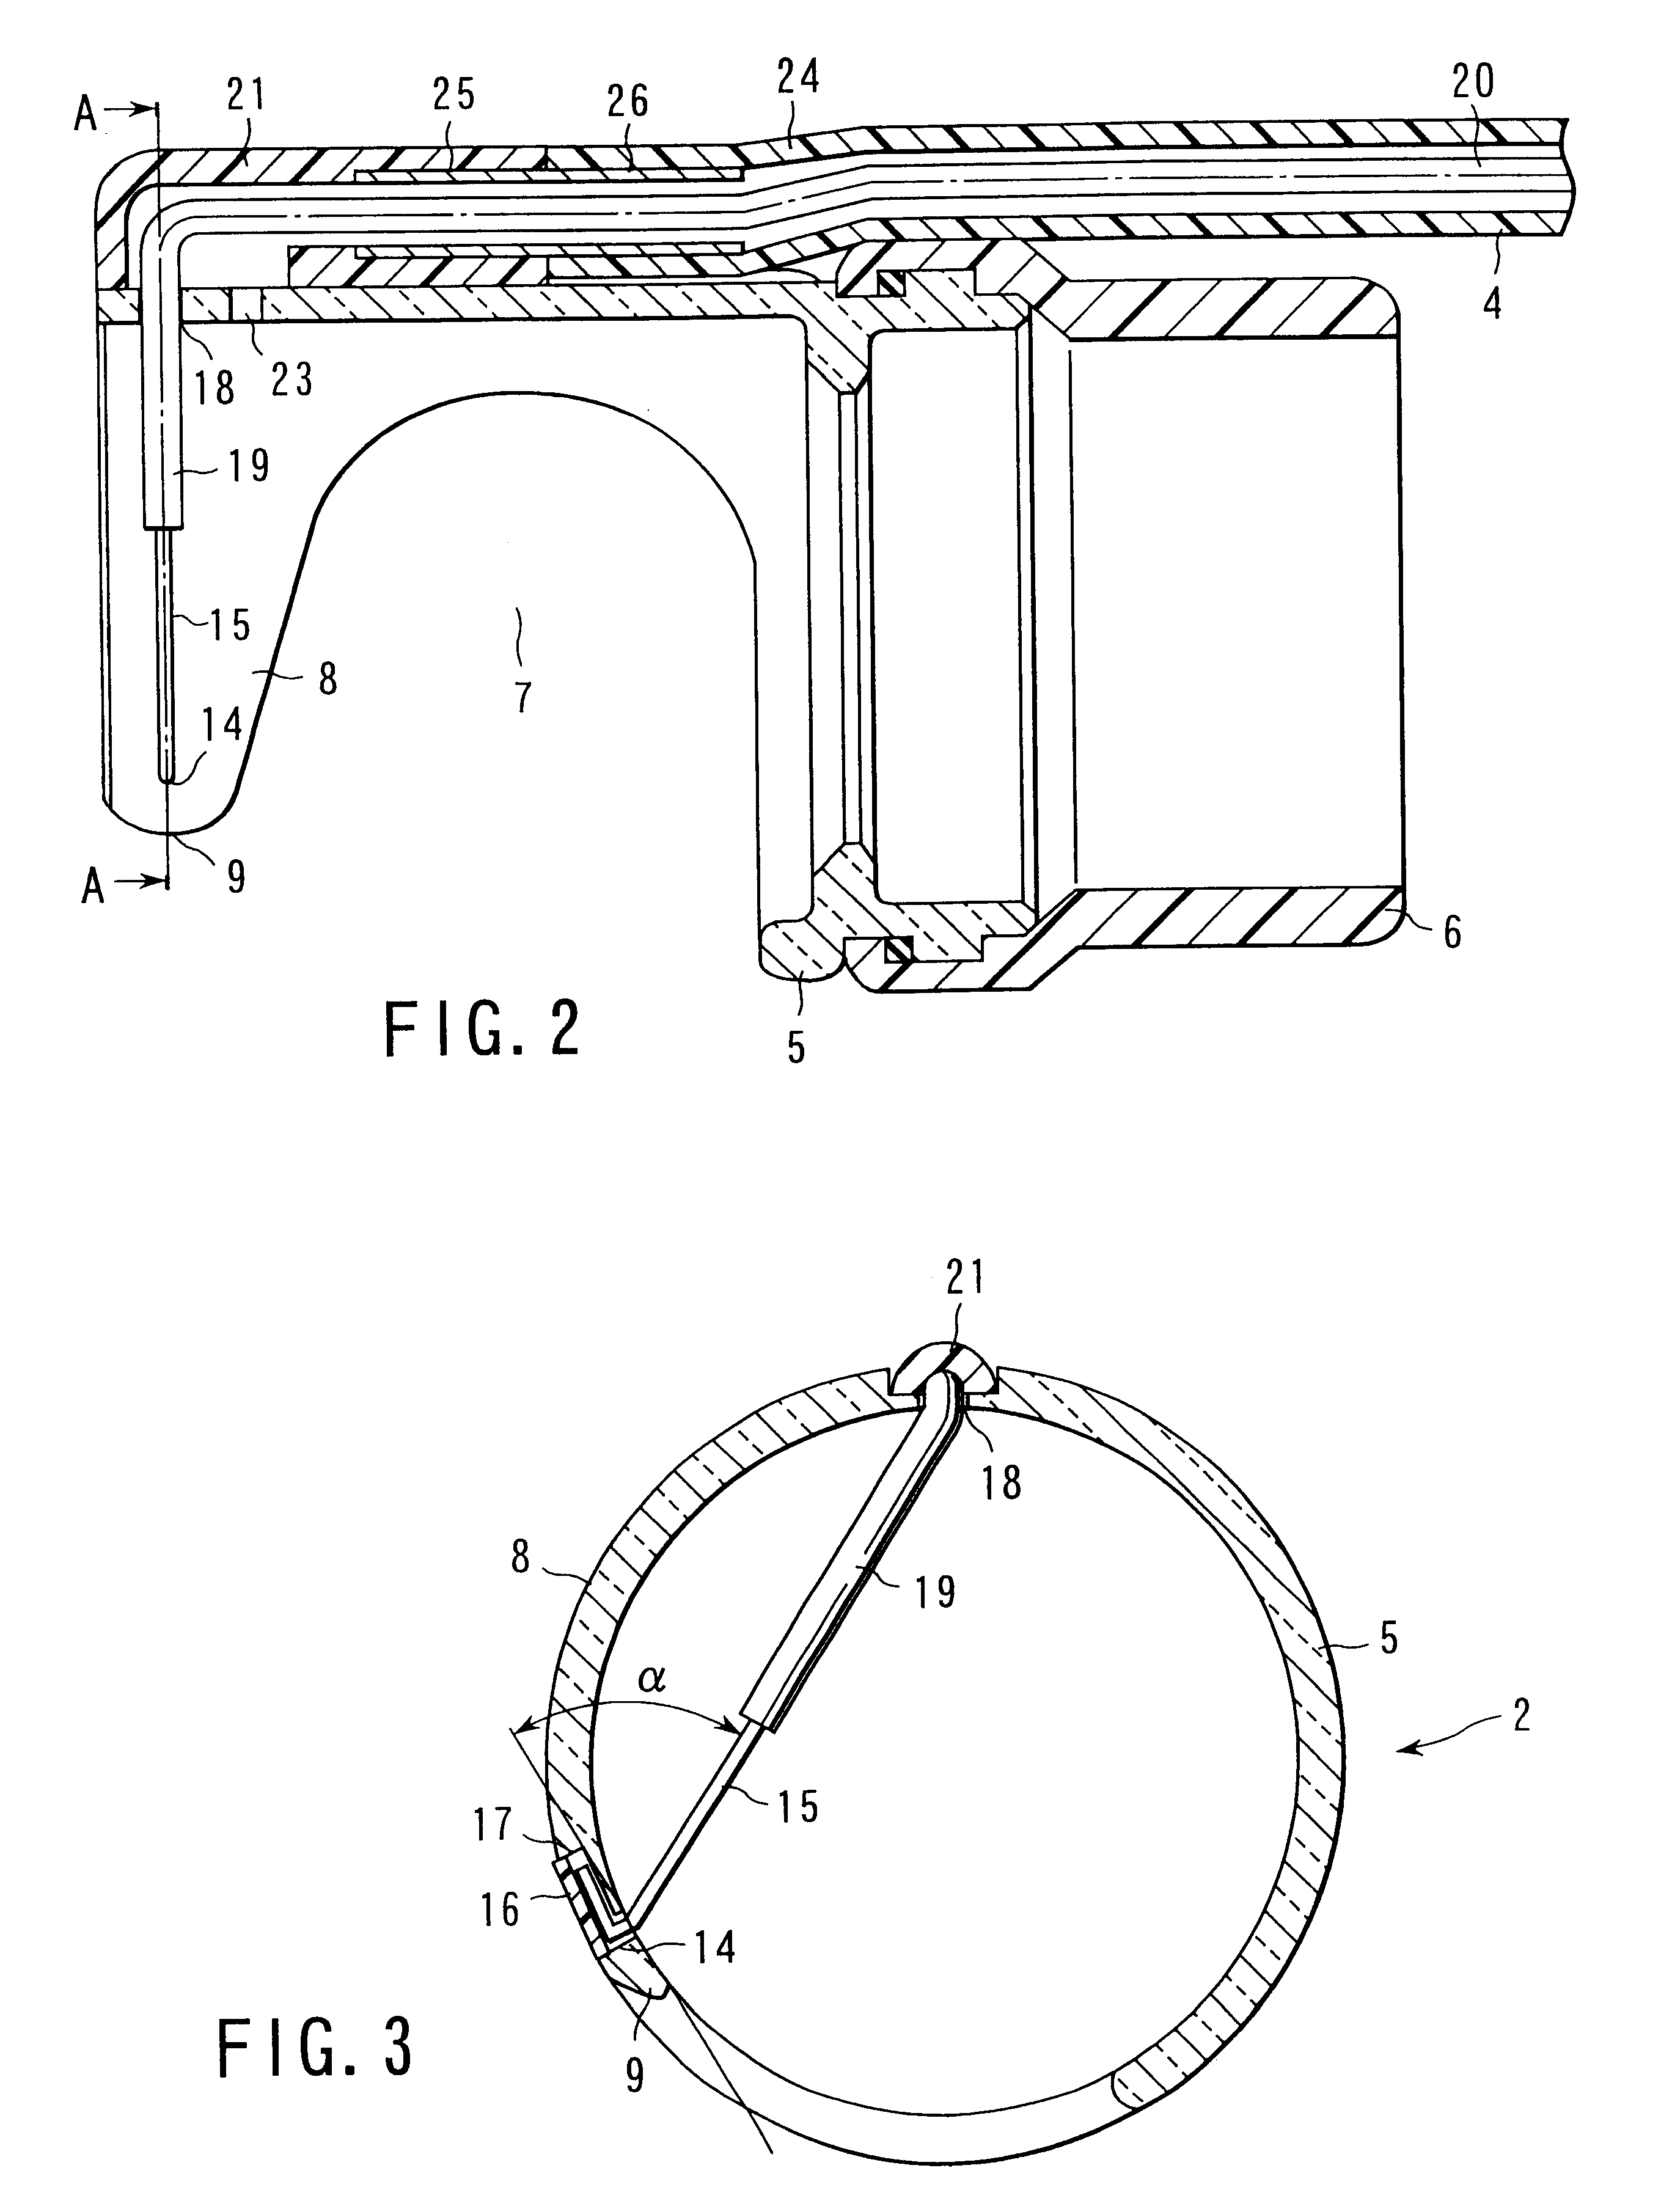 Treatment apparatus for endoscope